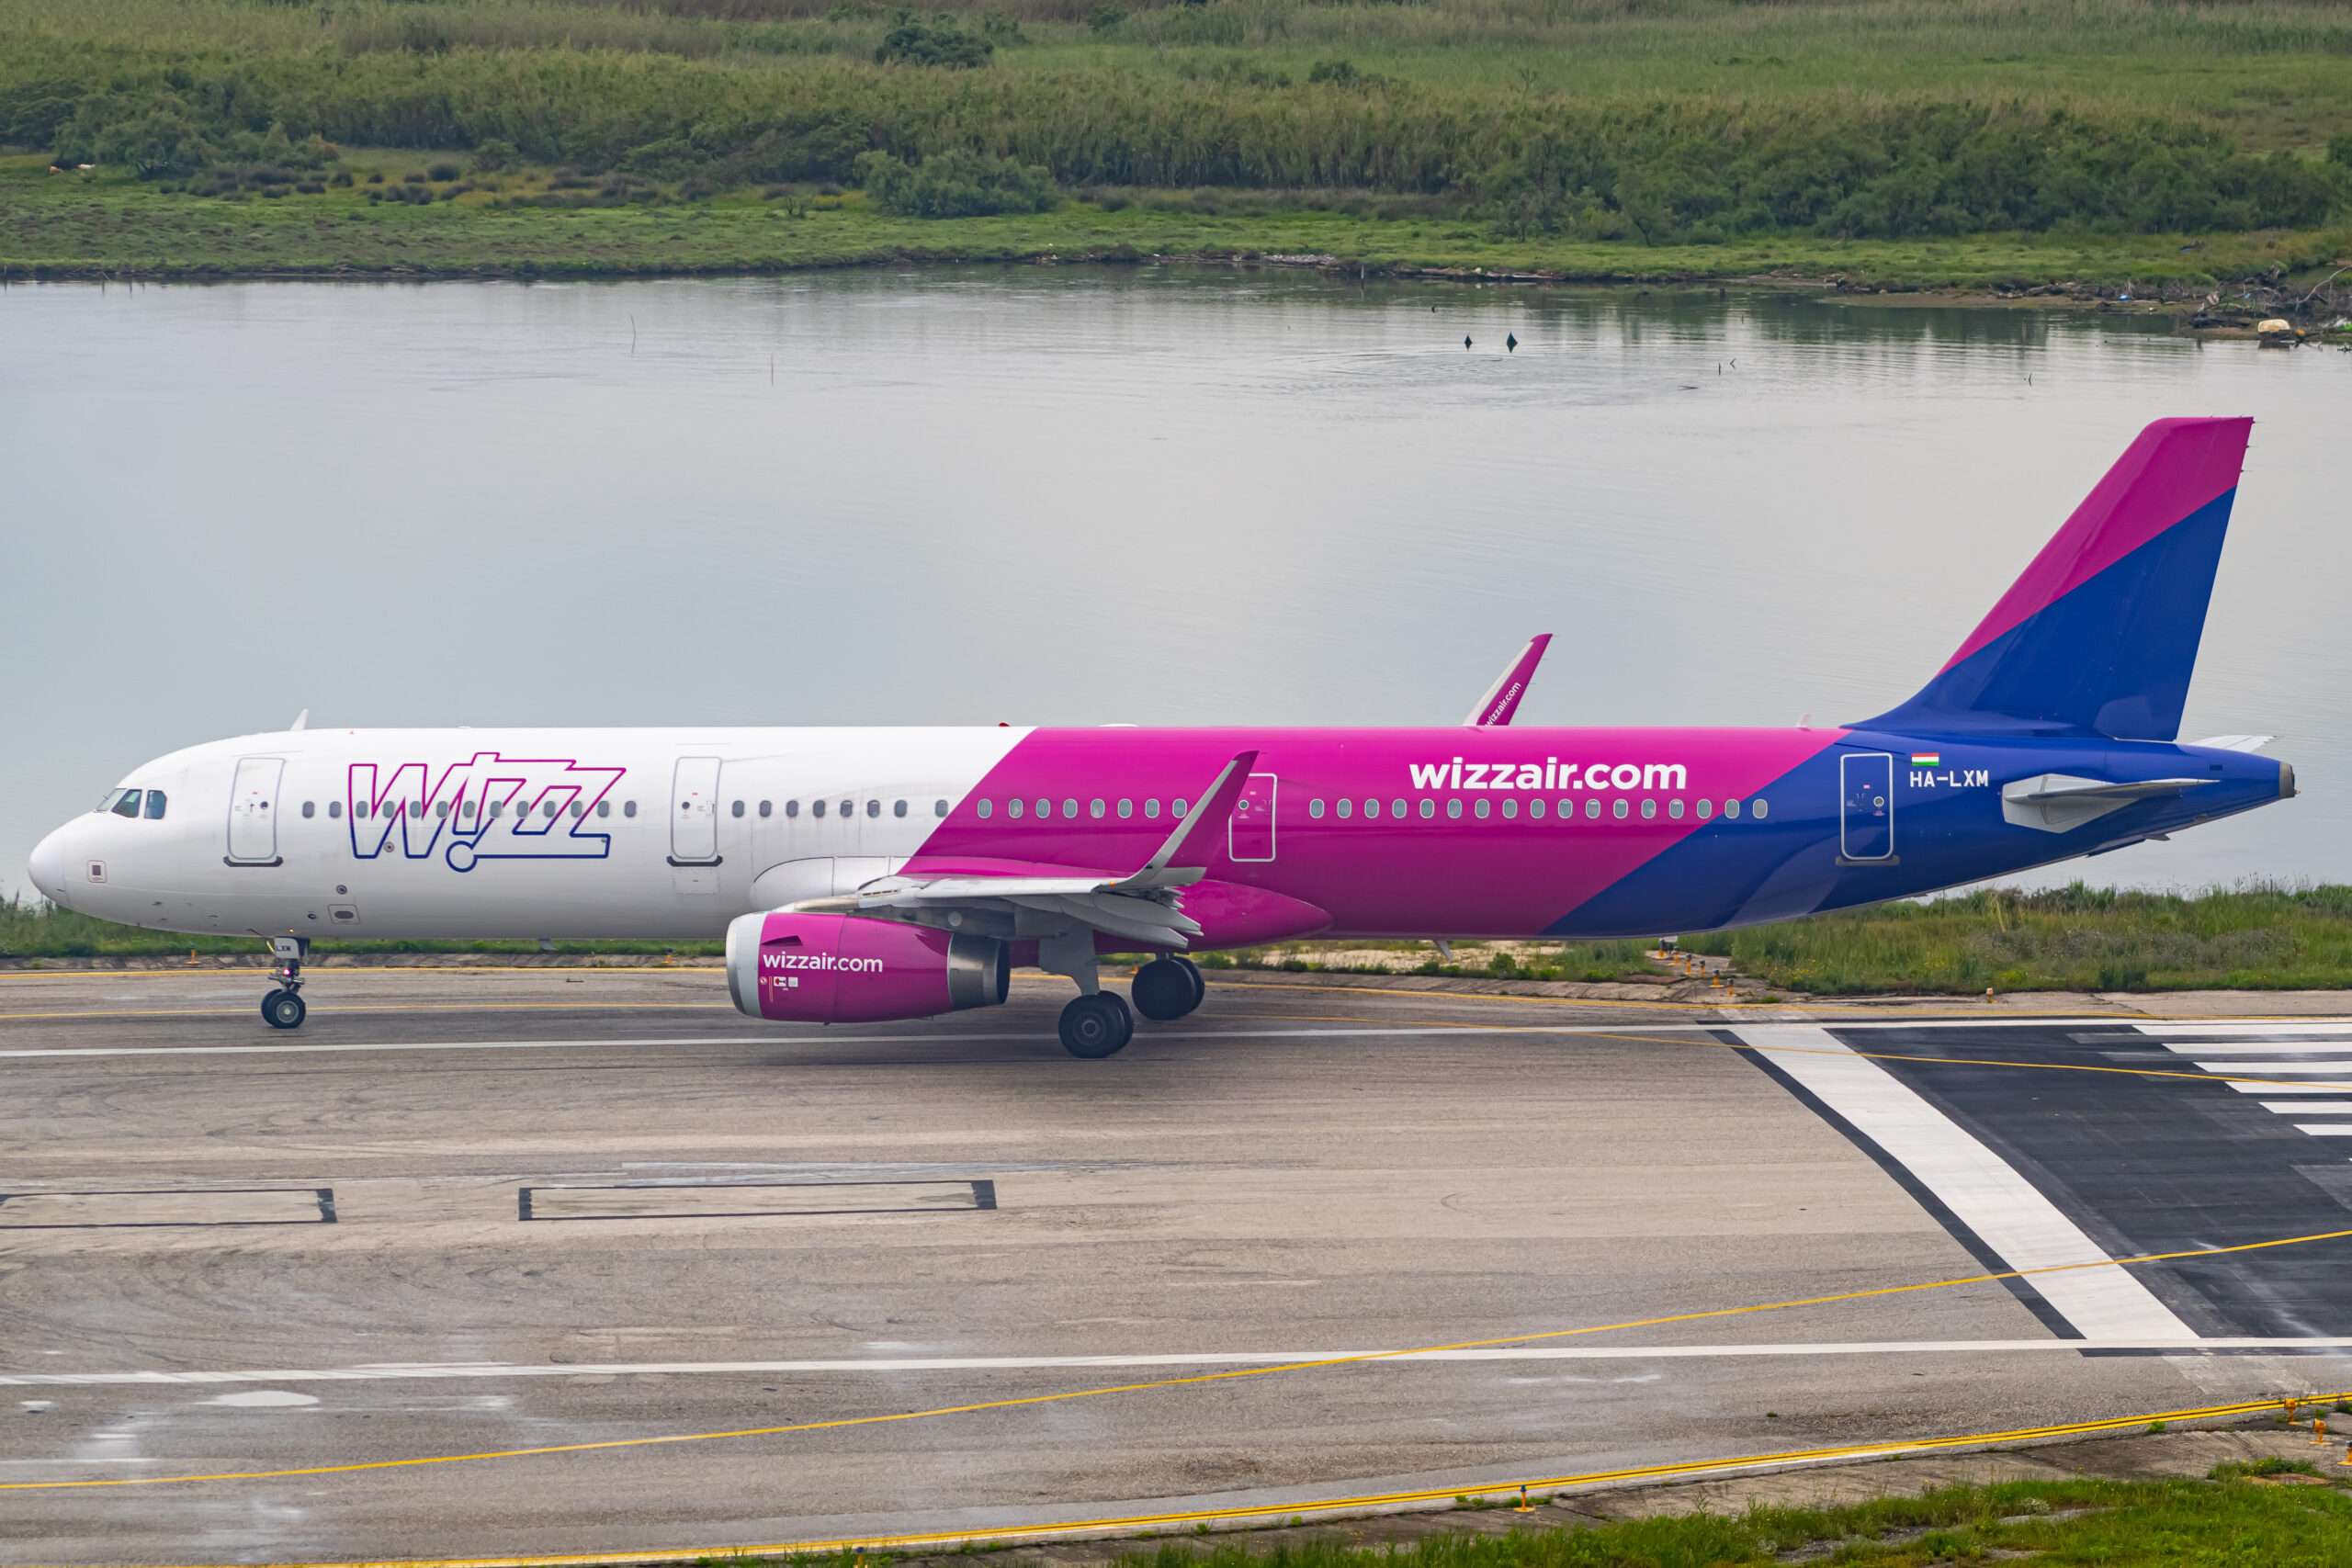 London Luton Celebrates 65 Million Wizz Air Passengers